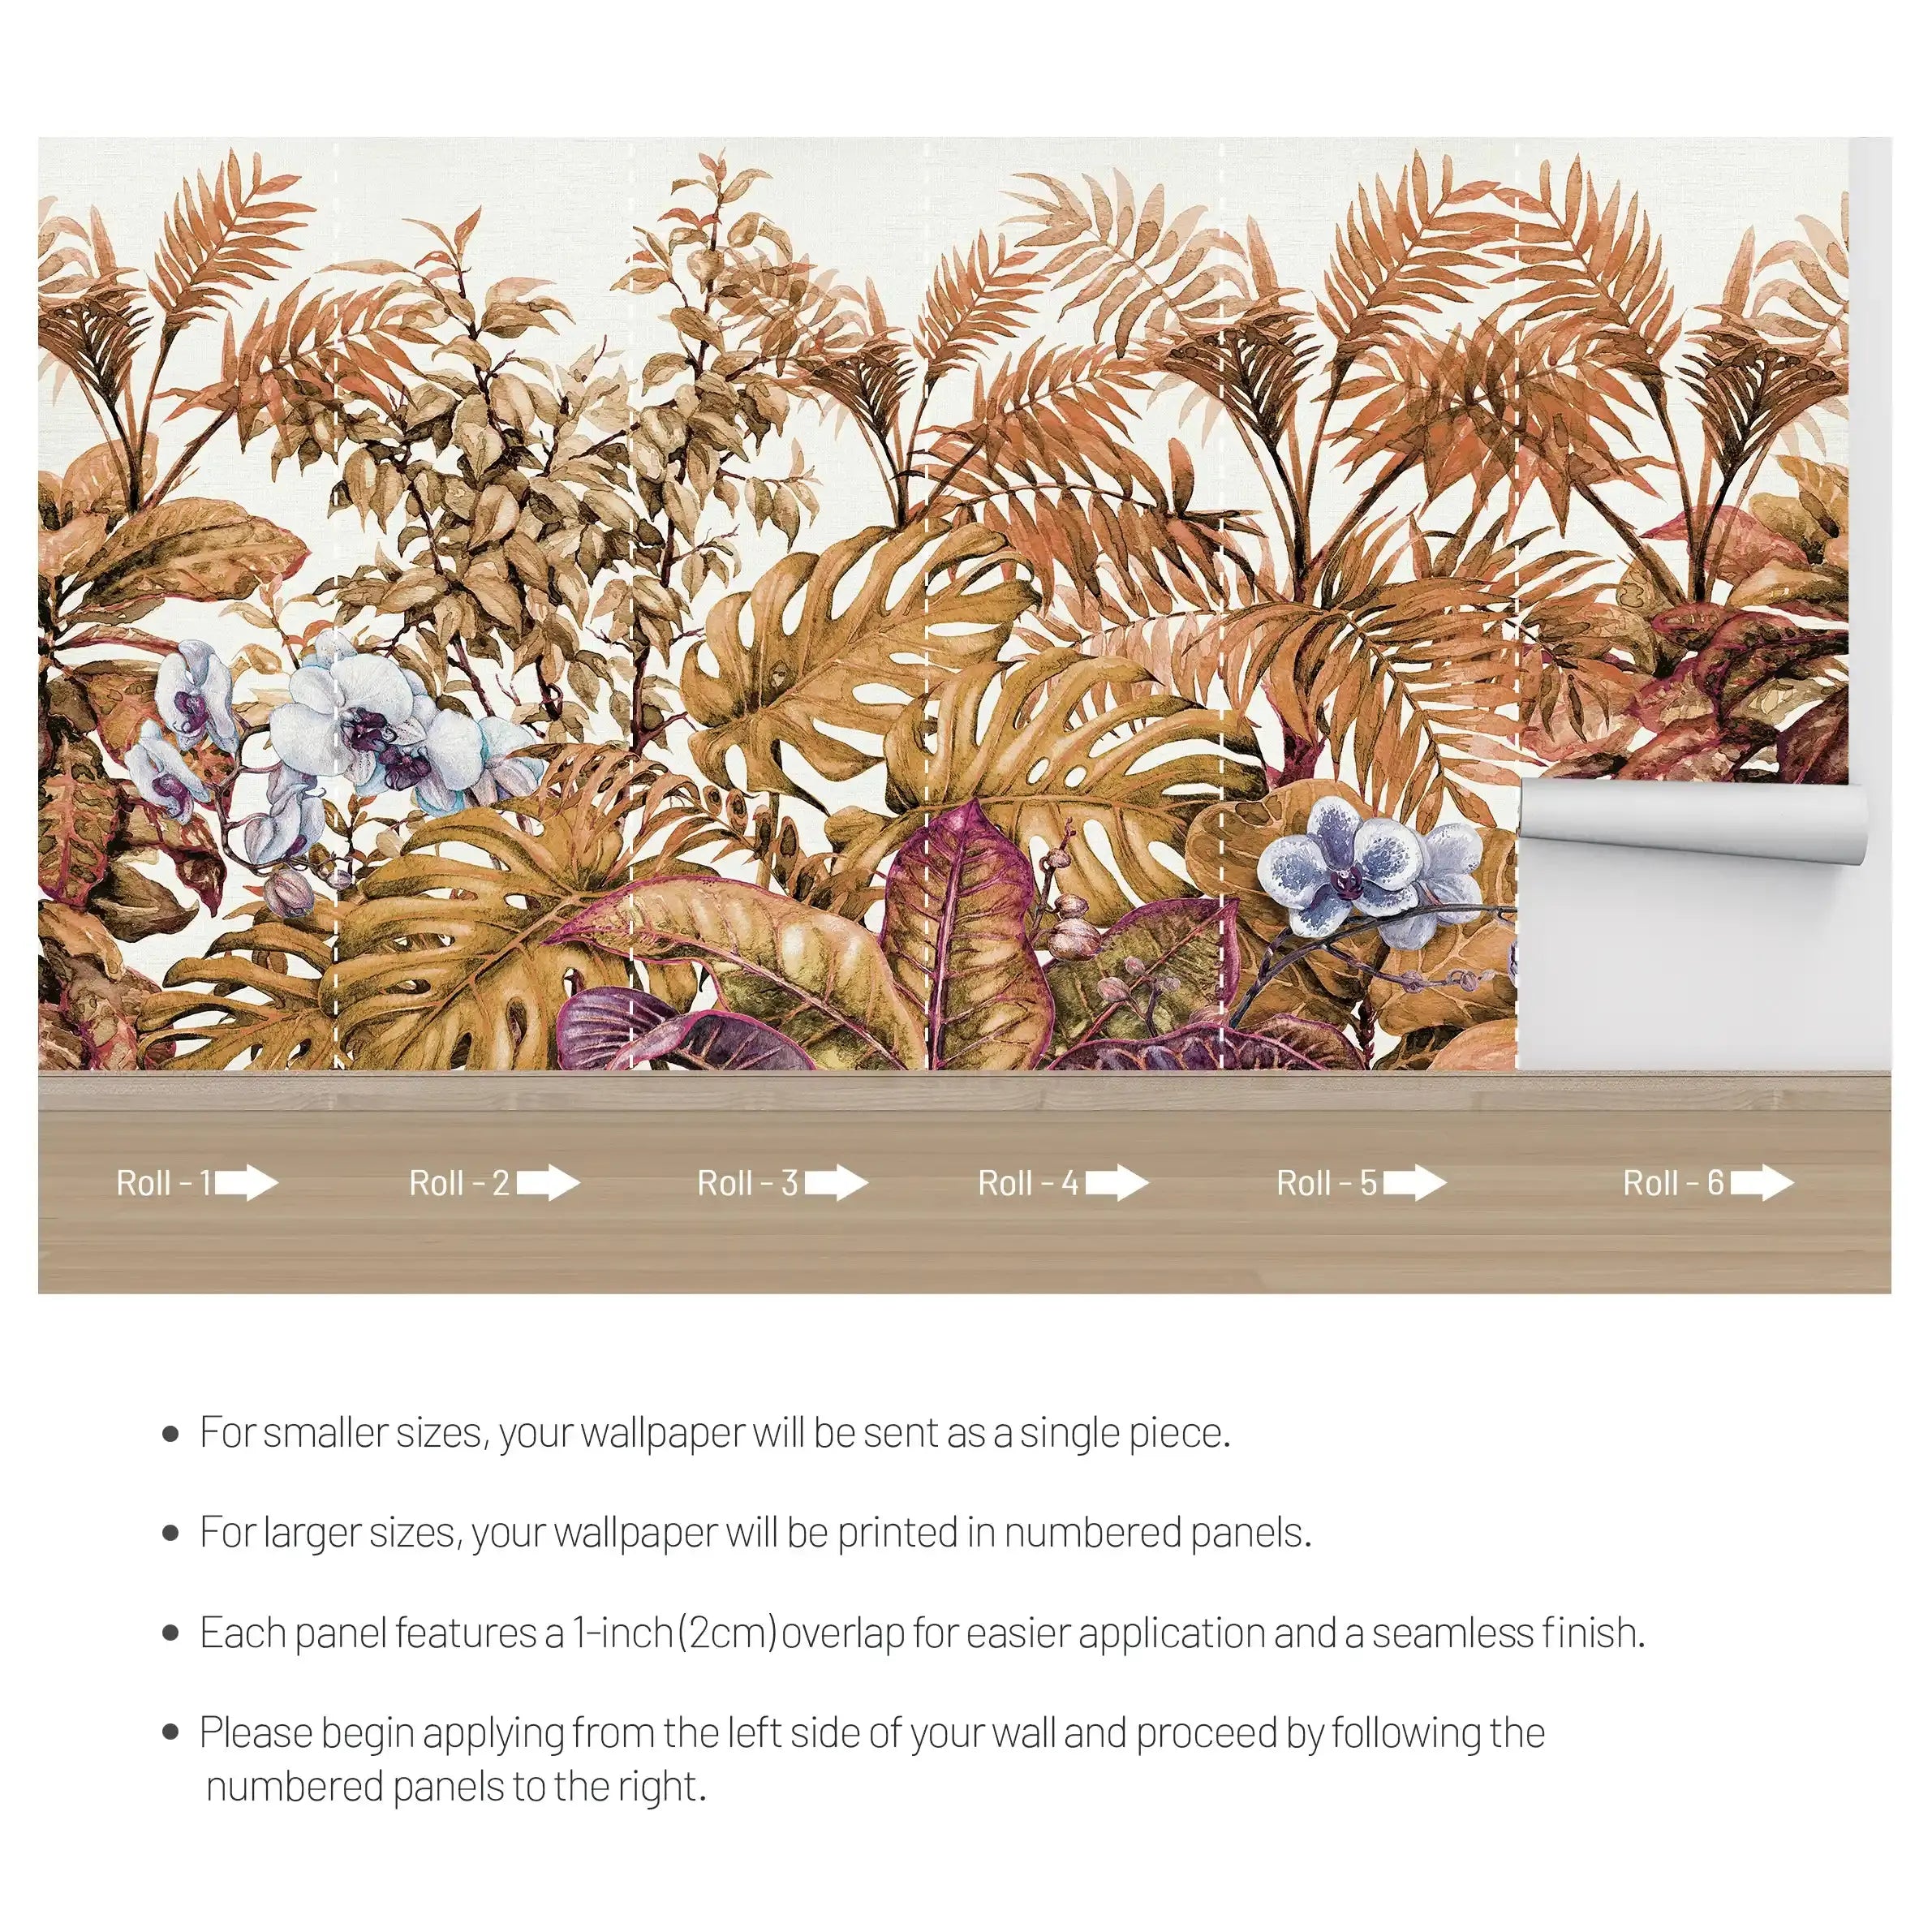 3052-B / Botanical Peel and Stick Wallpaper - Tropical, Brown Watercolor Plant Design, Easy Install, Removable Wallpaper for Bathroom & Bedroom Decor - Artevella